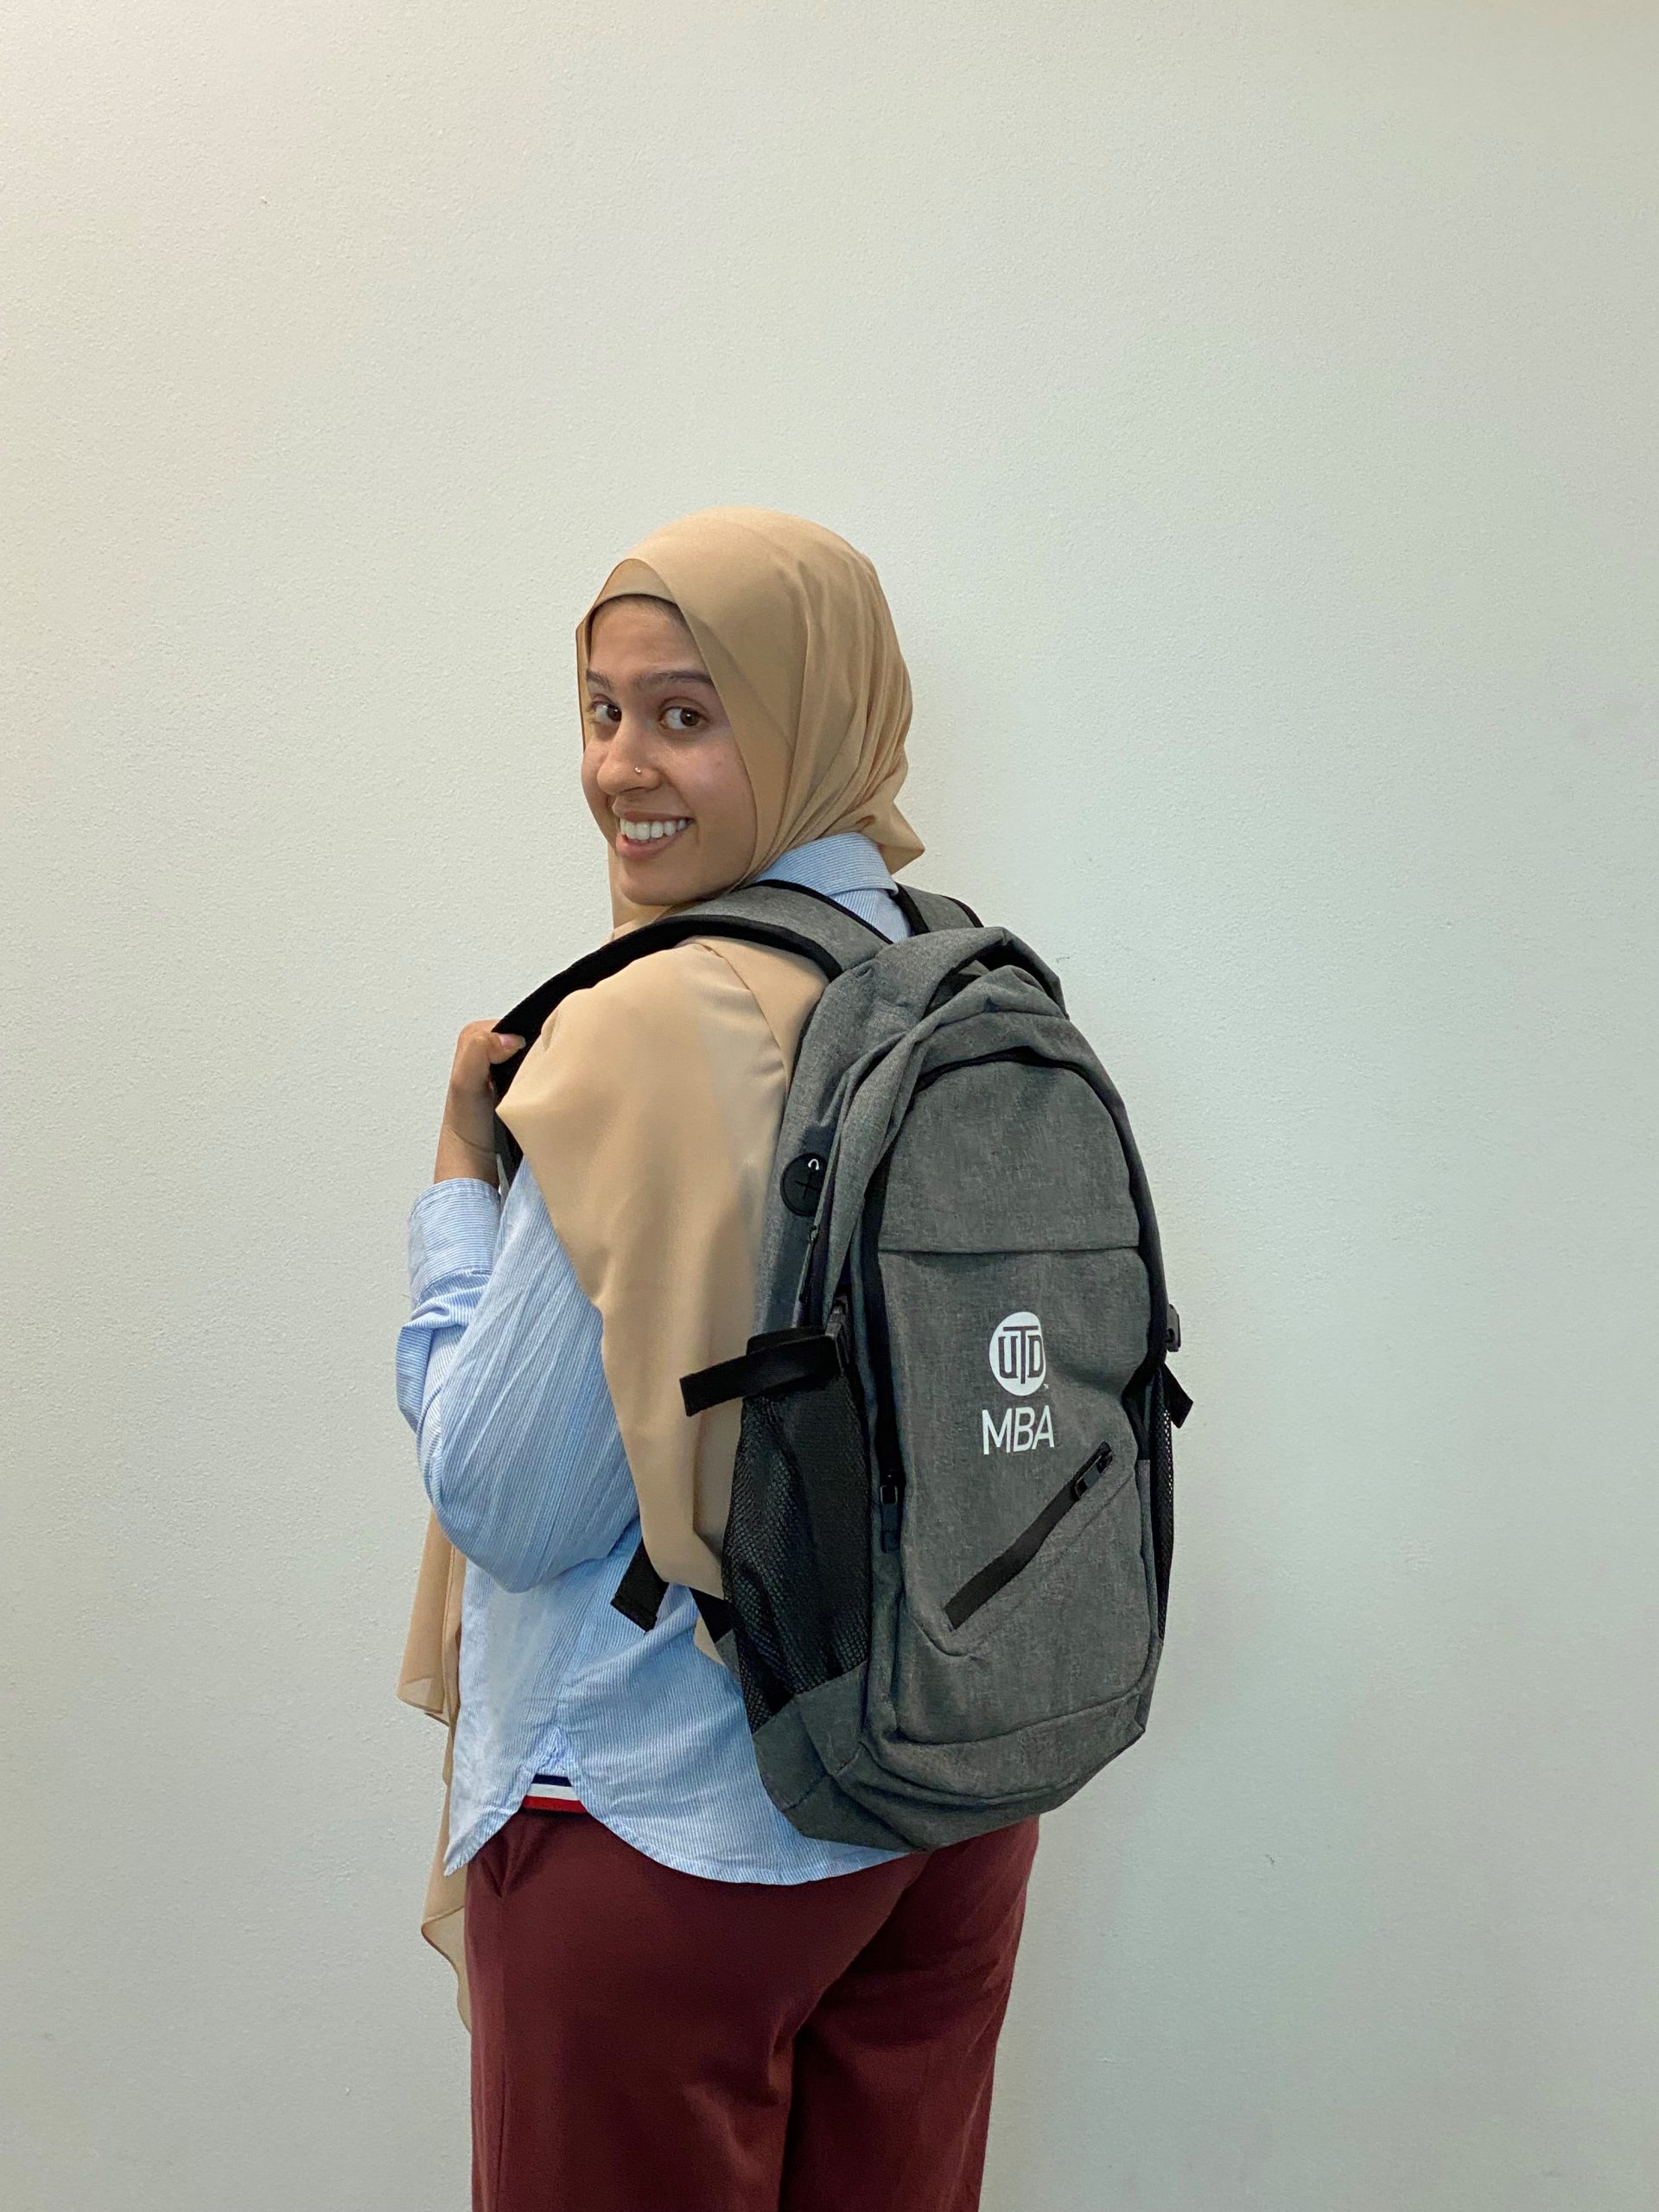 student model wearing a bag